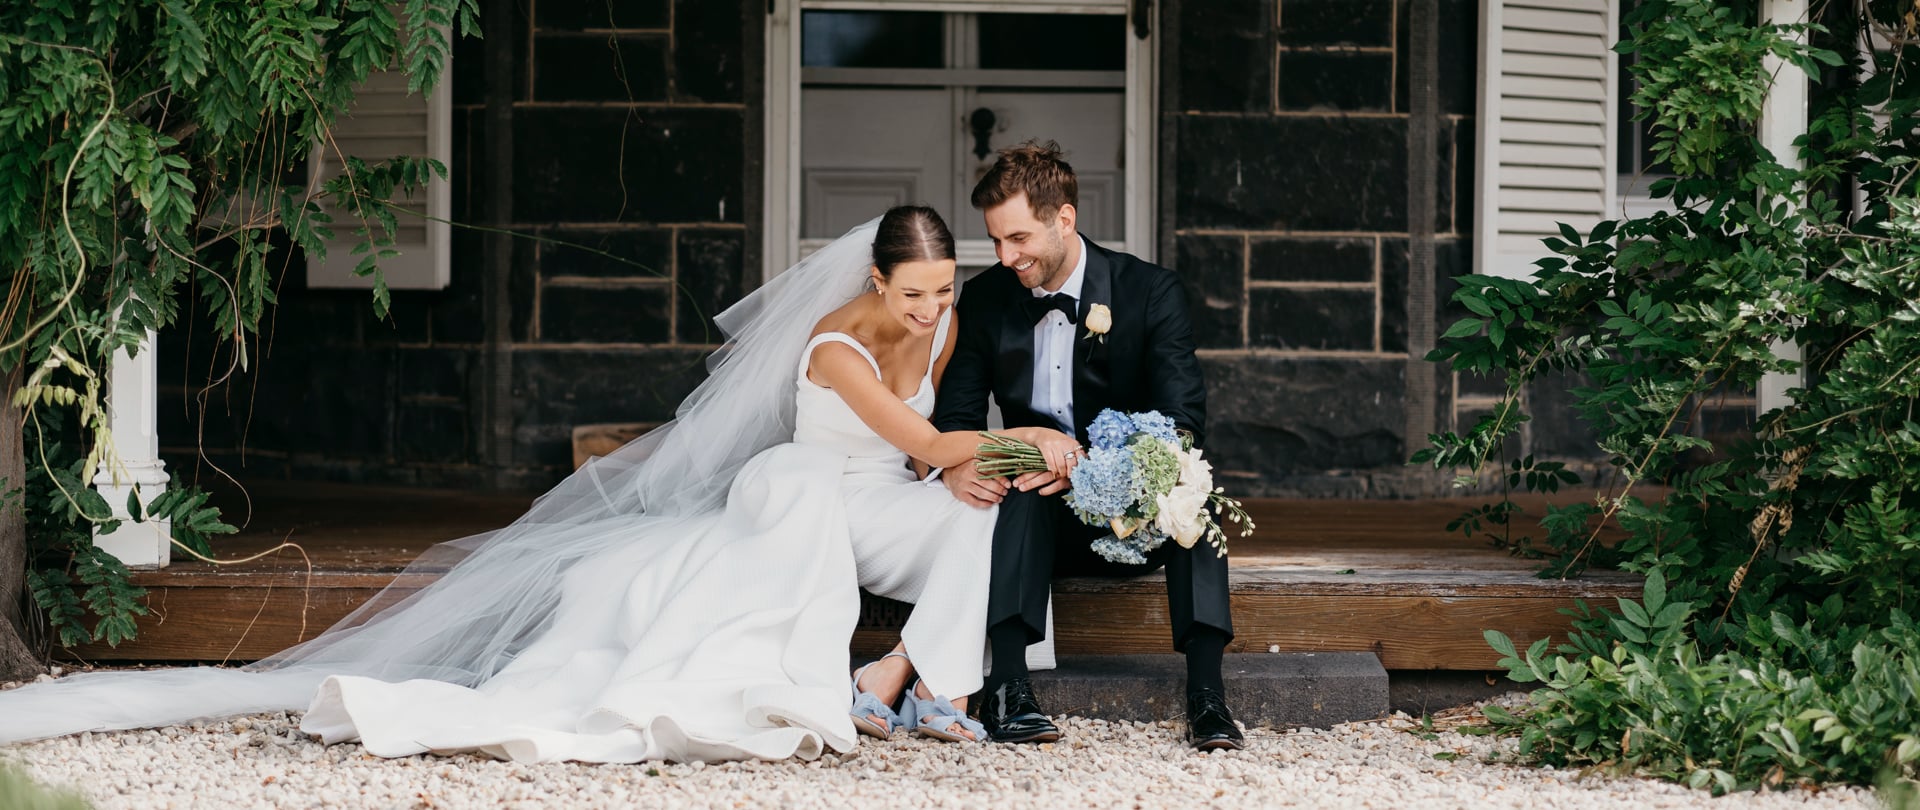 Ruby & Daniel Wedding Video Filmed atVictoria,Australia